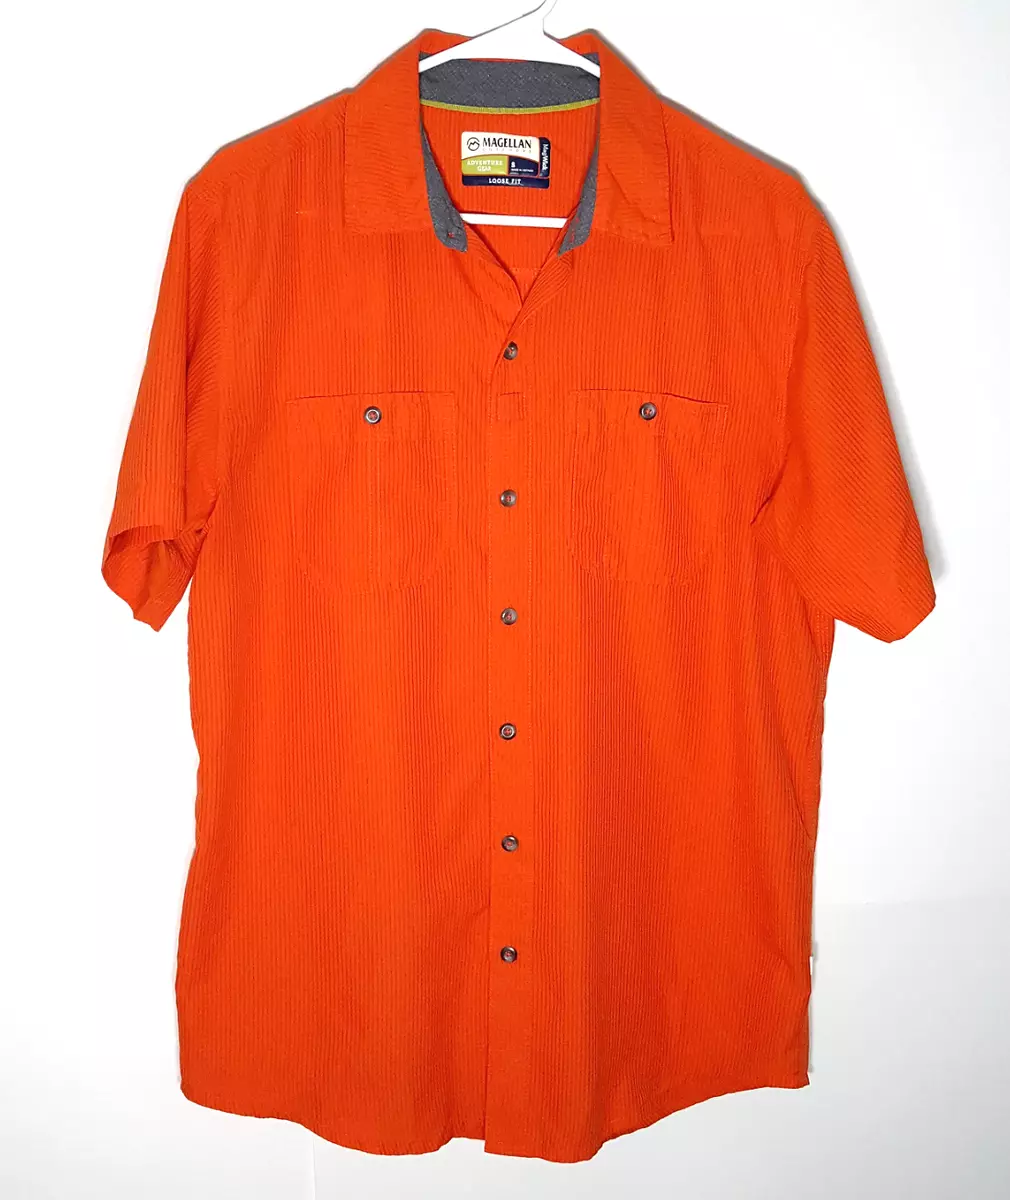 Magellan Vented Fishing Shirt | Orange Collared Casual Outdoors | Mens Small